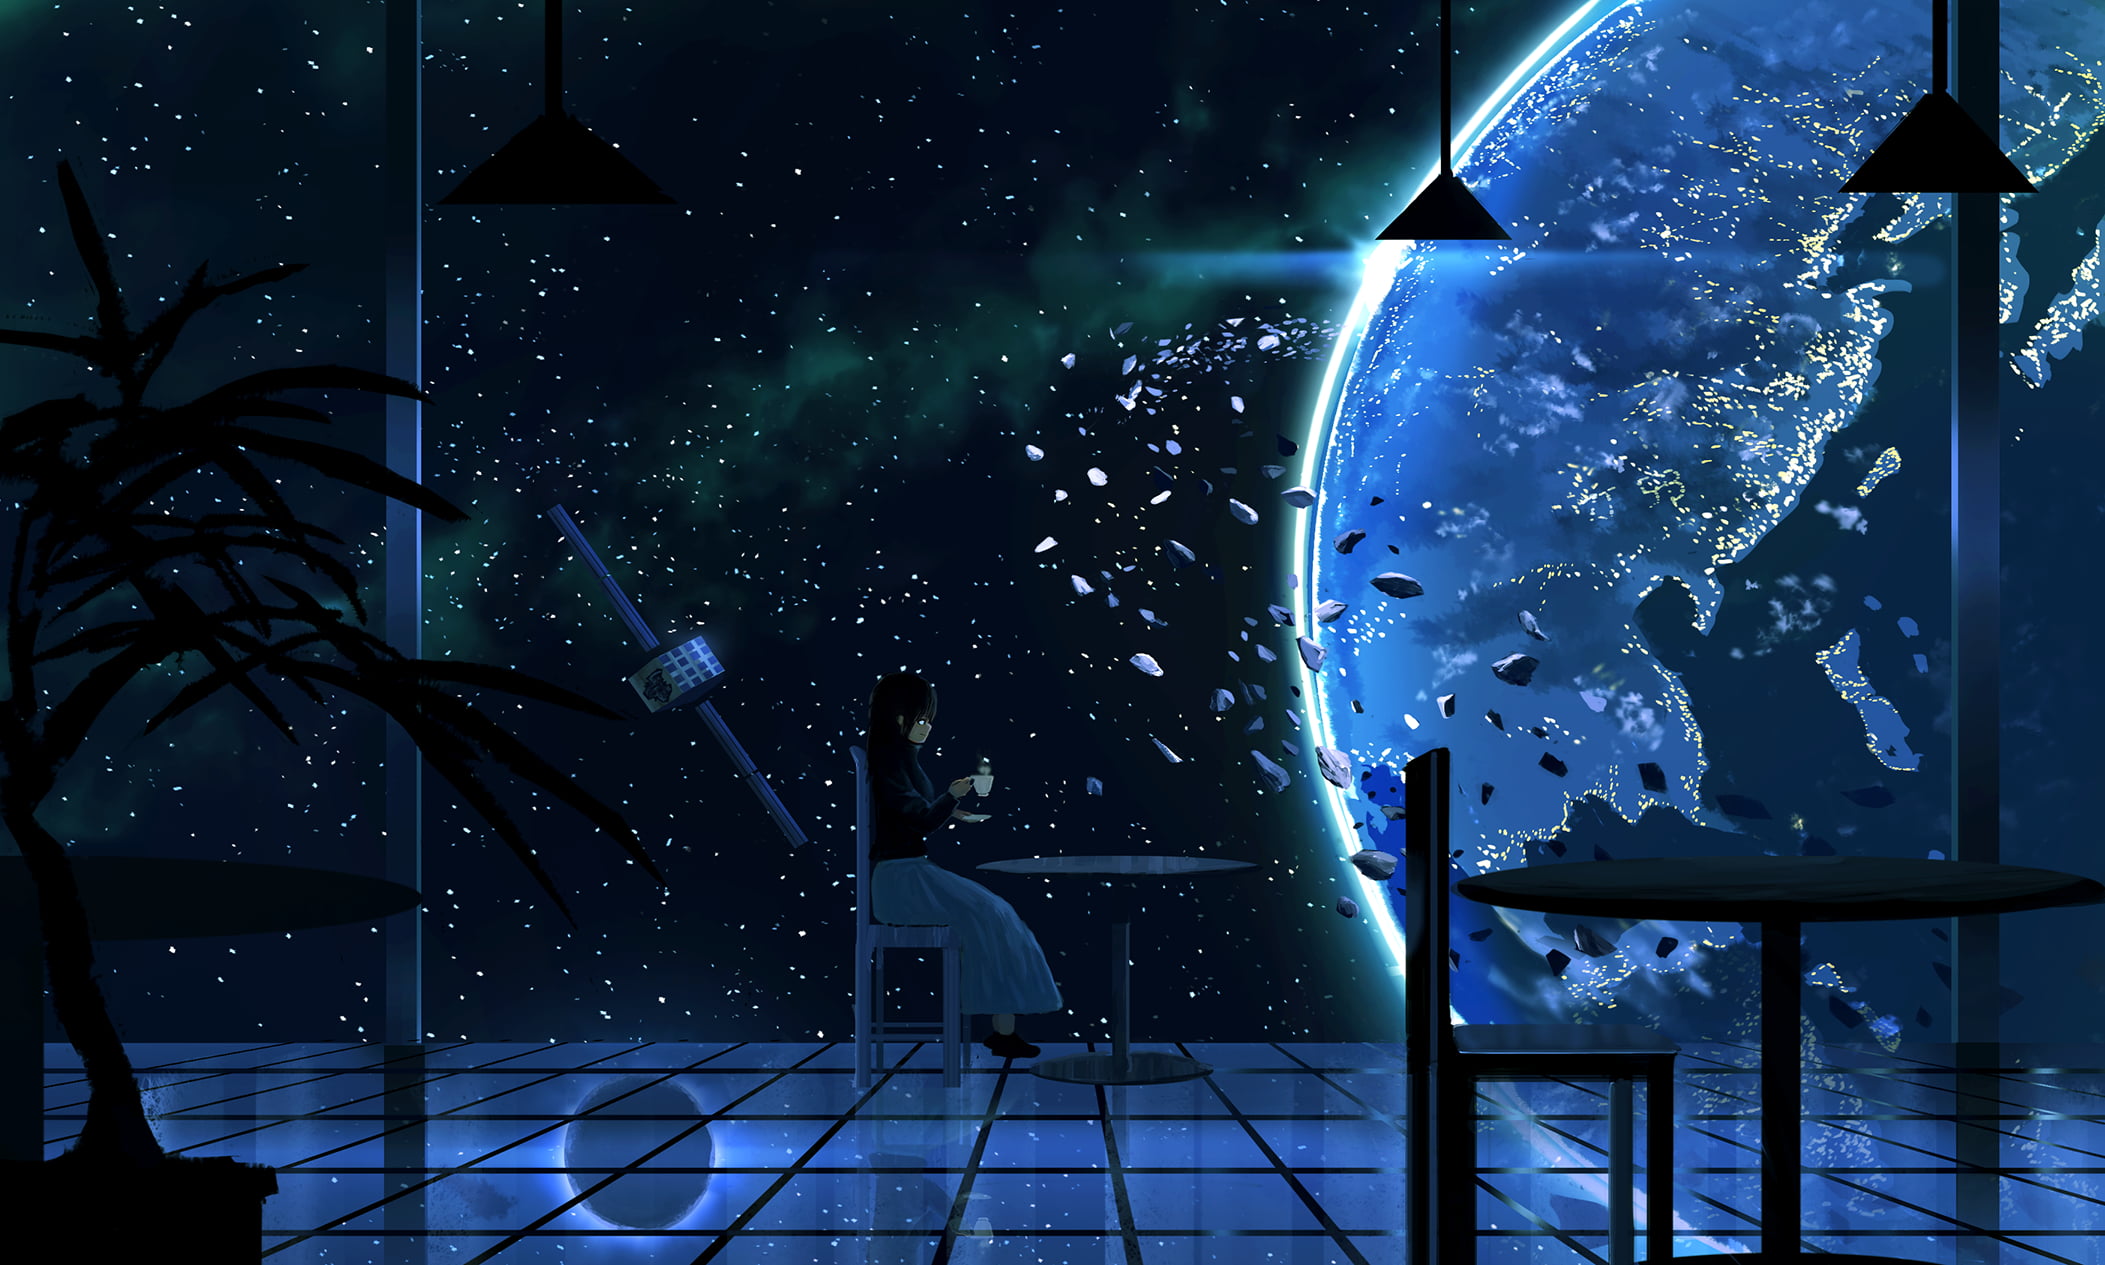 anime-themed galaxy wallpaper, space, tea, night, illuminated